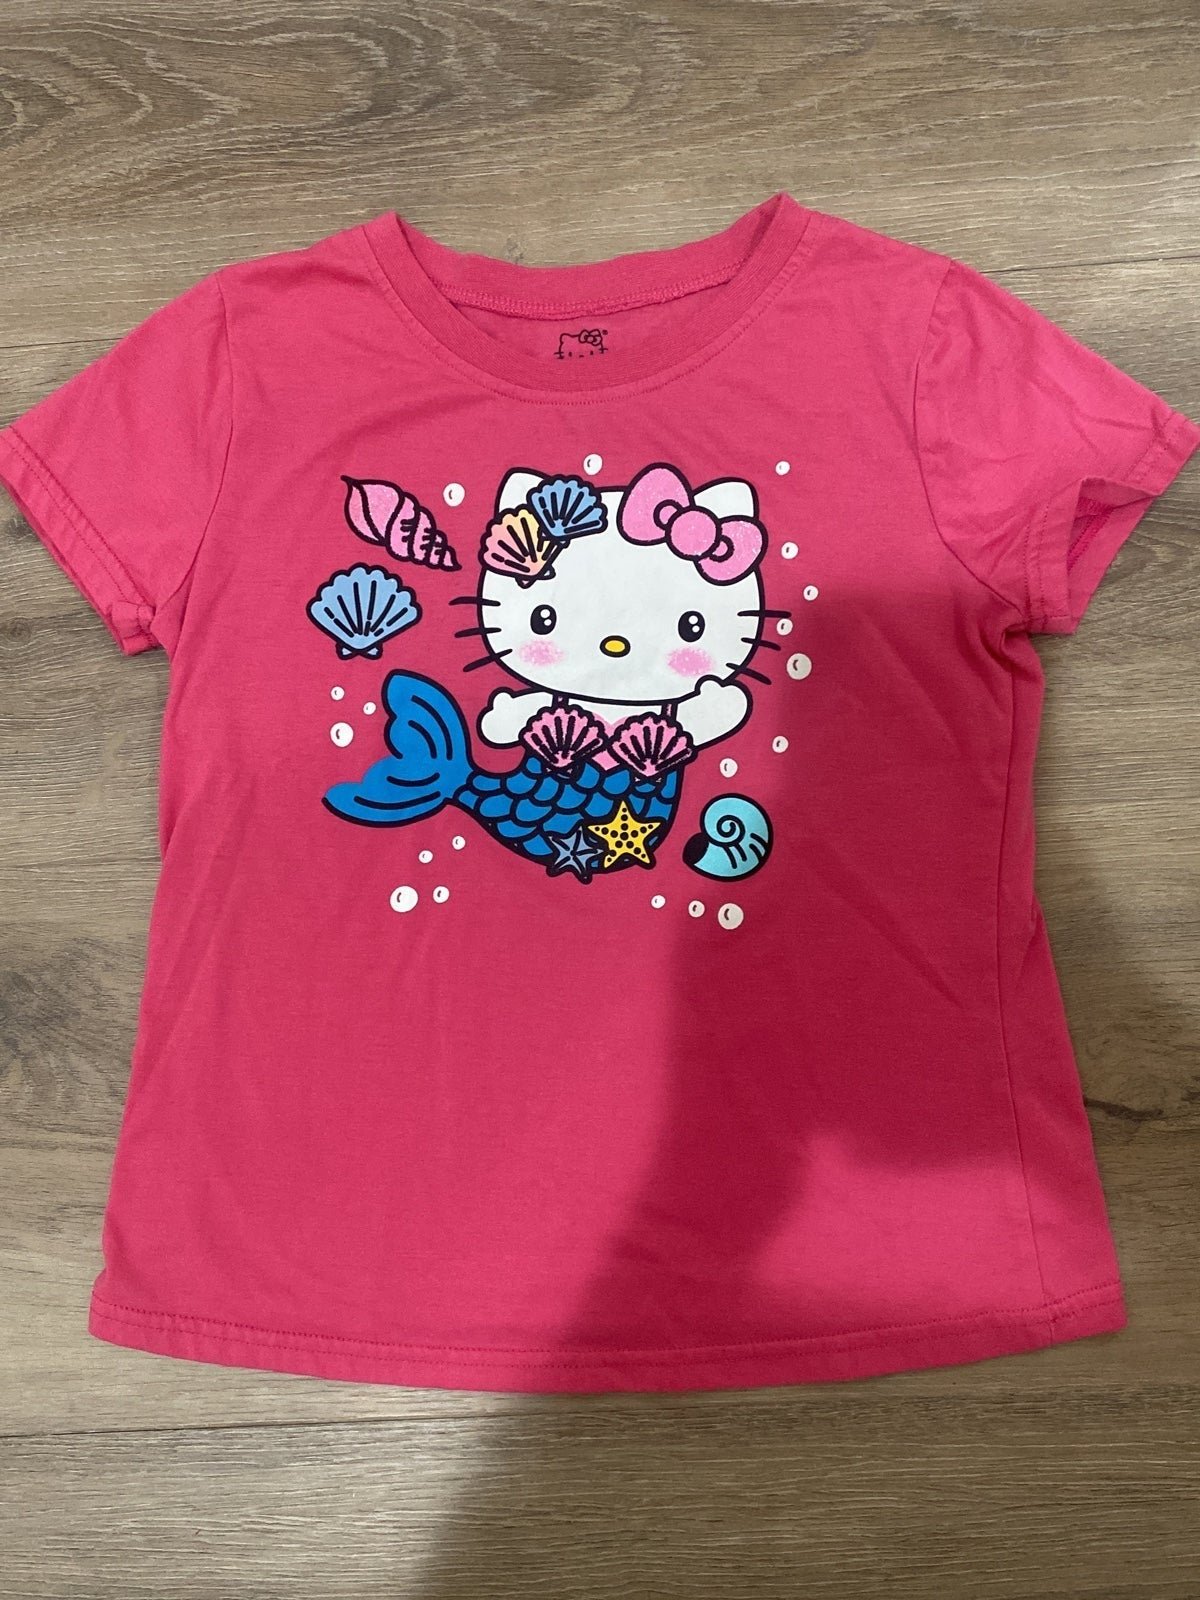 The Best Seller Hello Kitty Mermaid Pink Shirt IgCCFsgG